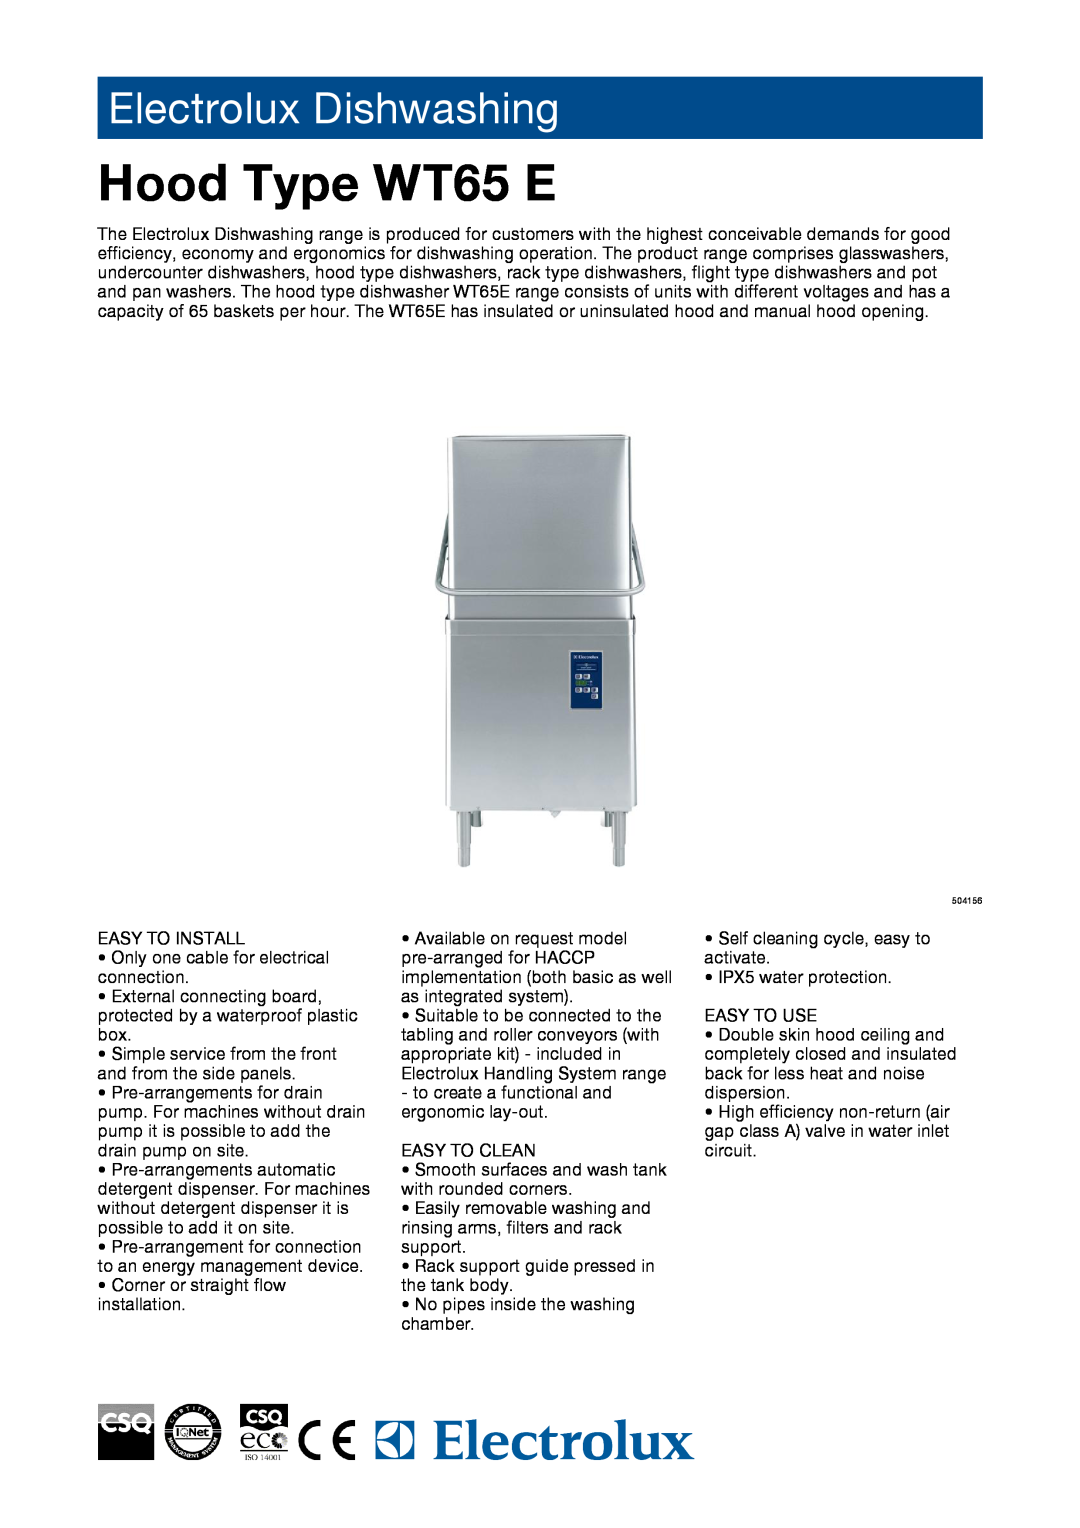 Electrolux WT65E manual Hood Type WT65 E, Electrolux Dishwashing 